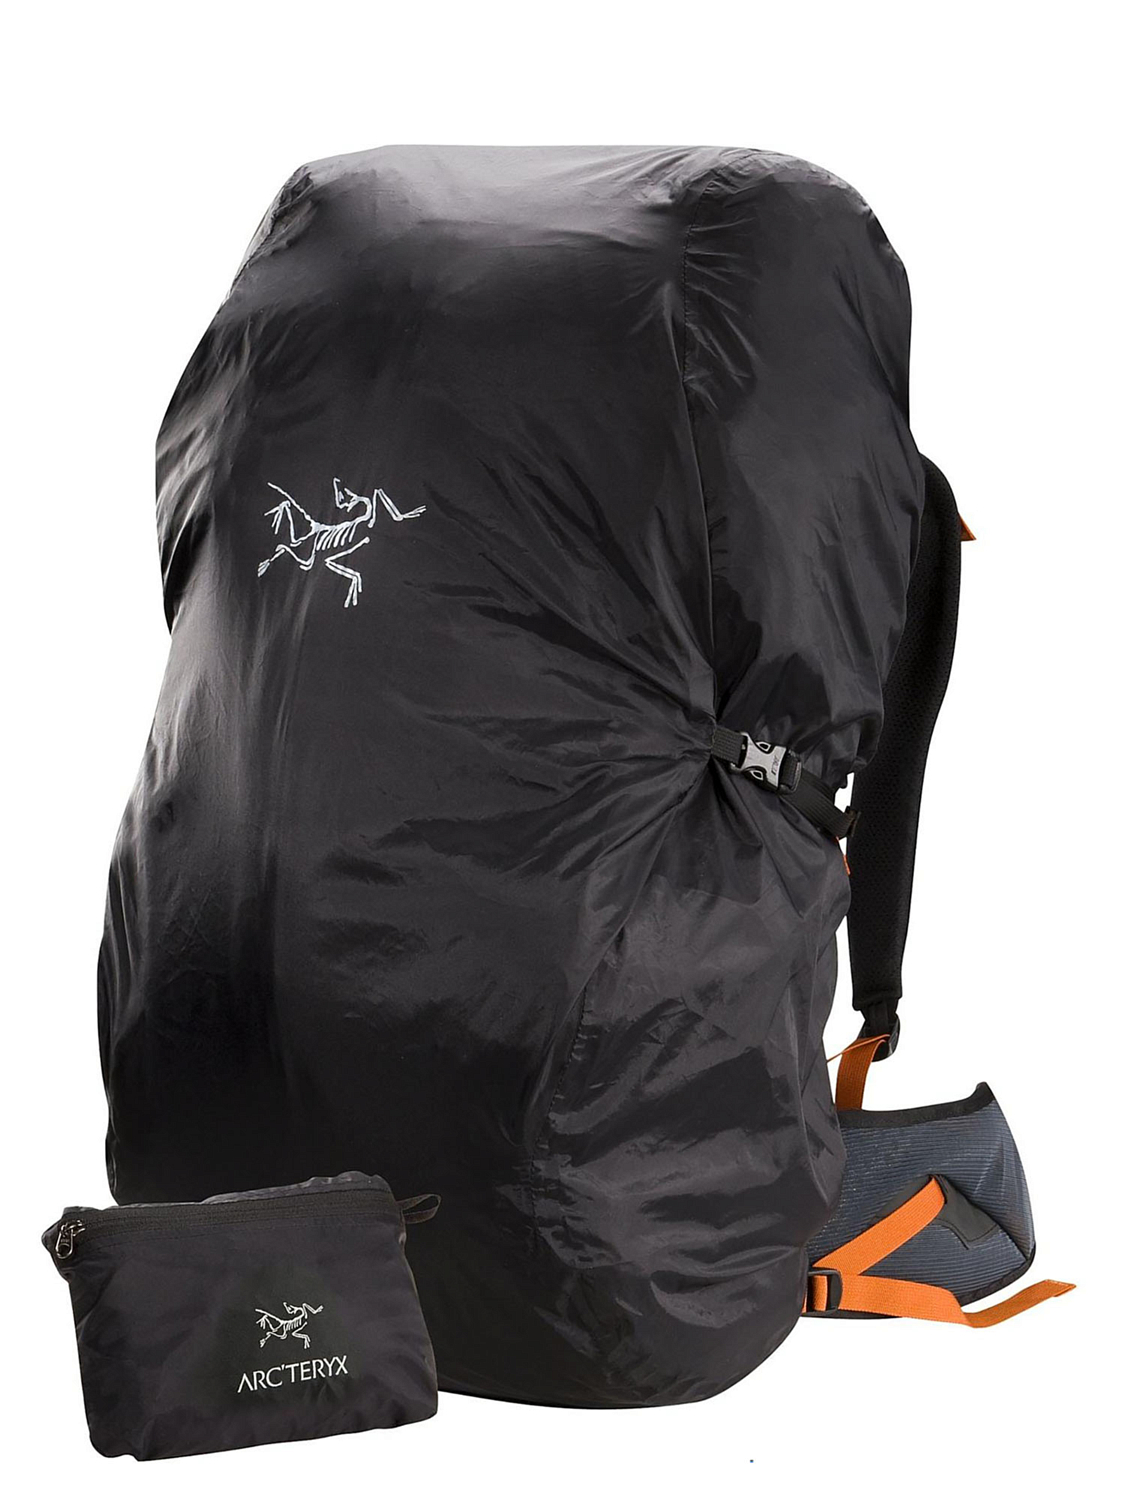 Чехол от дождя Arcteryx Pack Shelter - S Black